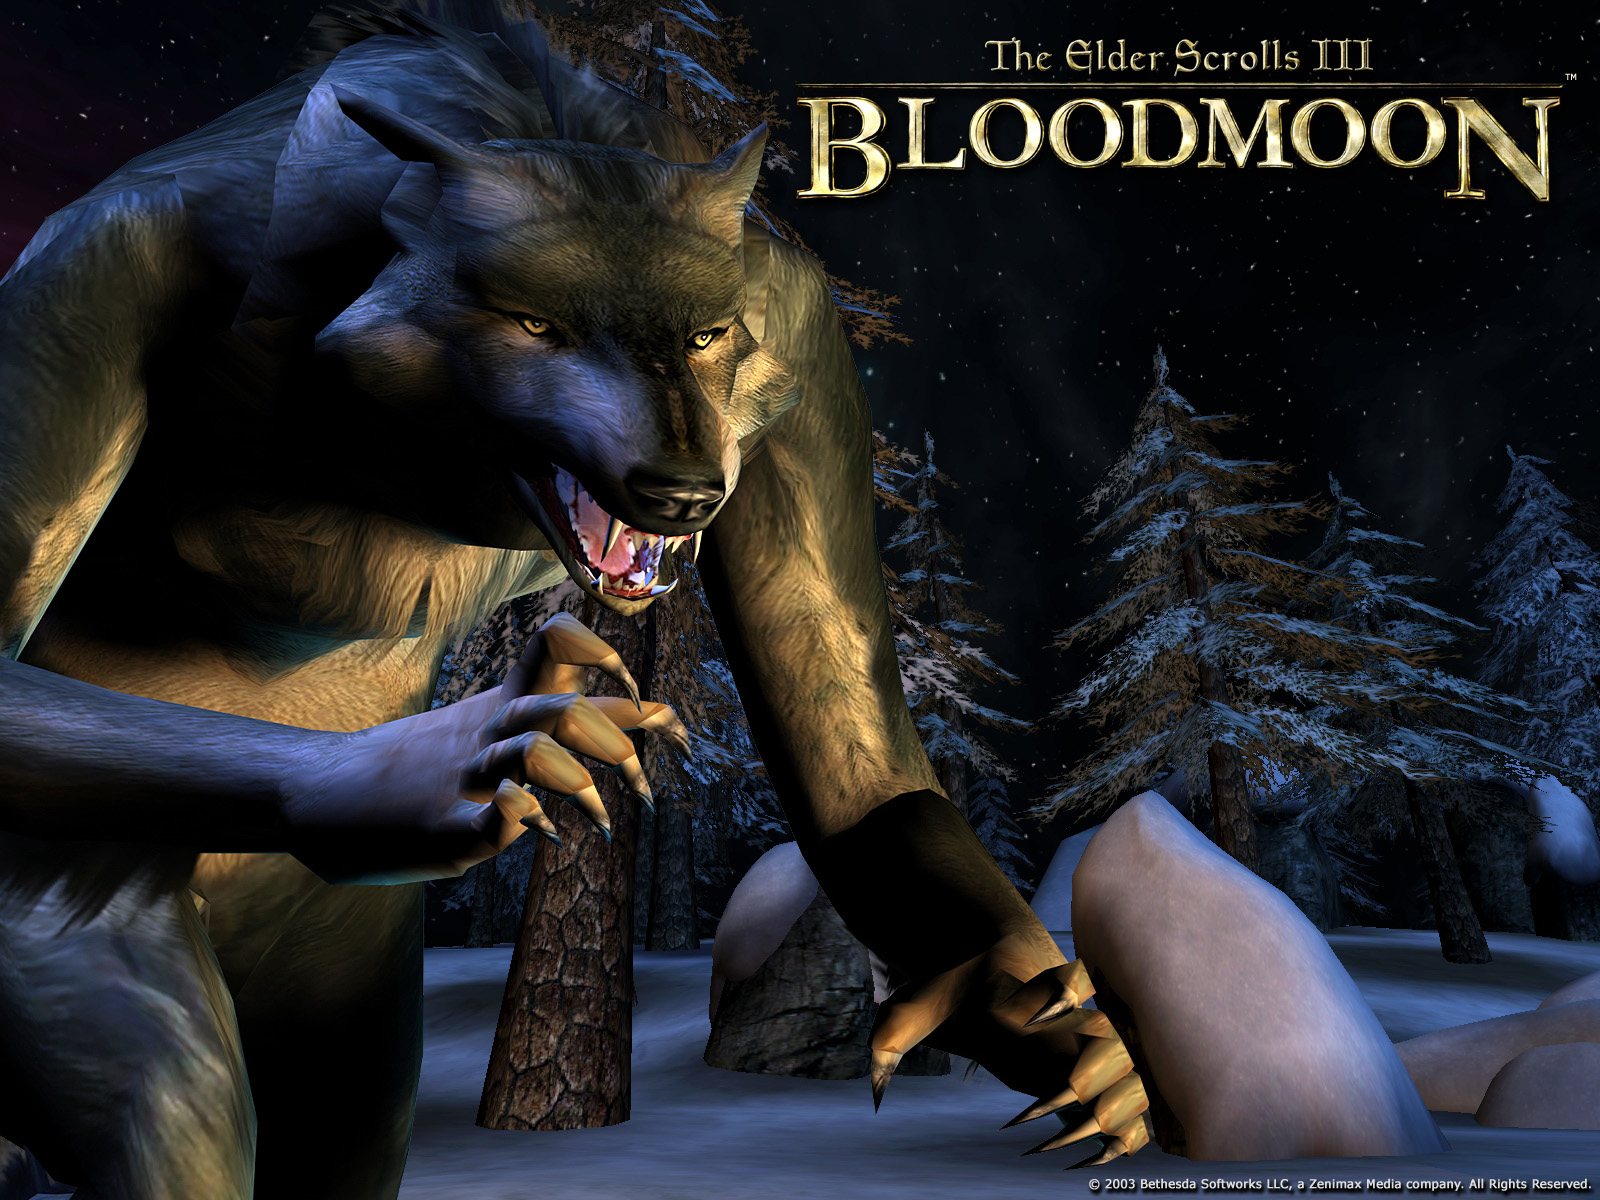 Bloodmoon werewolf from the game The Elder Scrolls III: Bloodmoon.